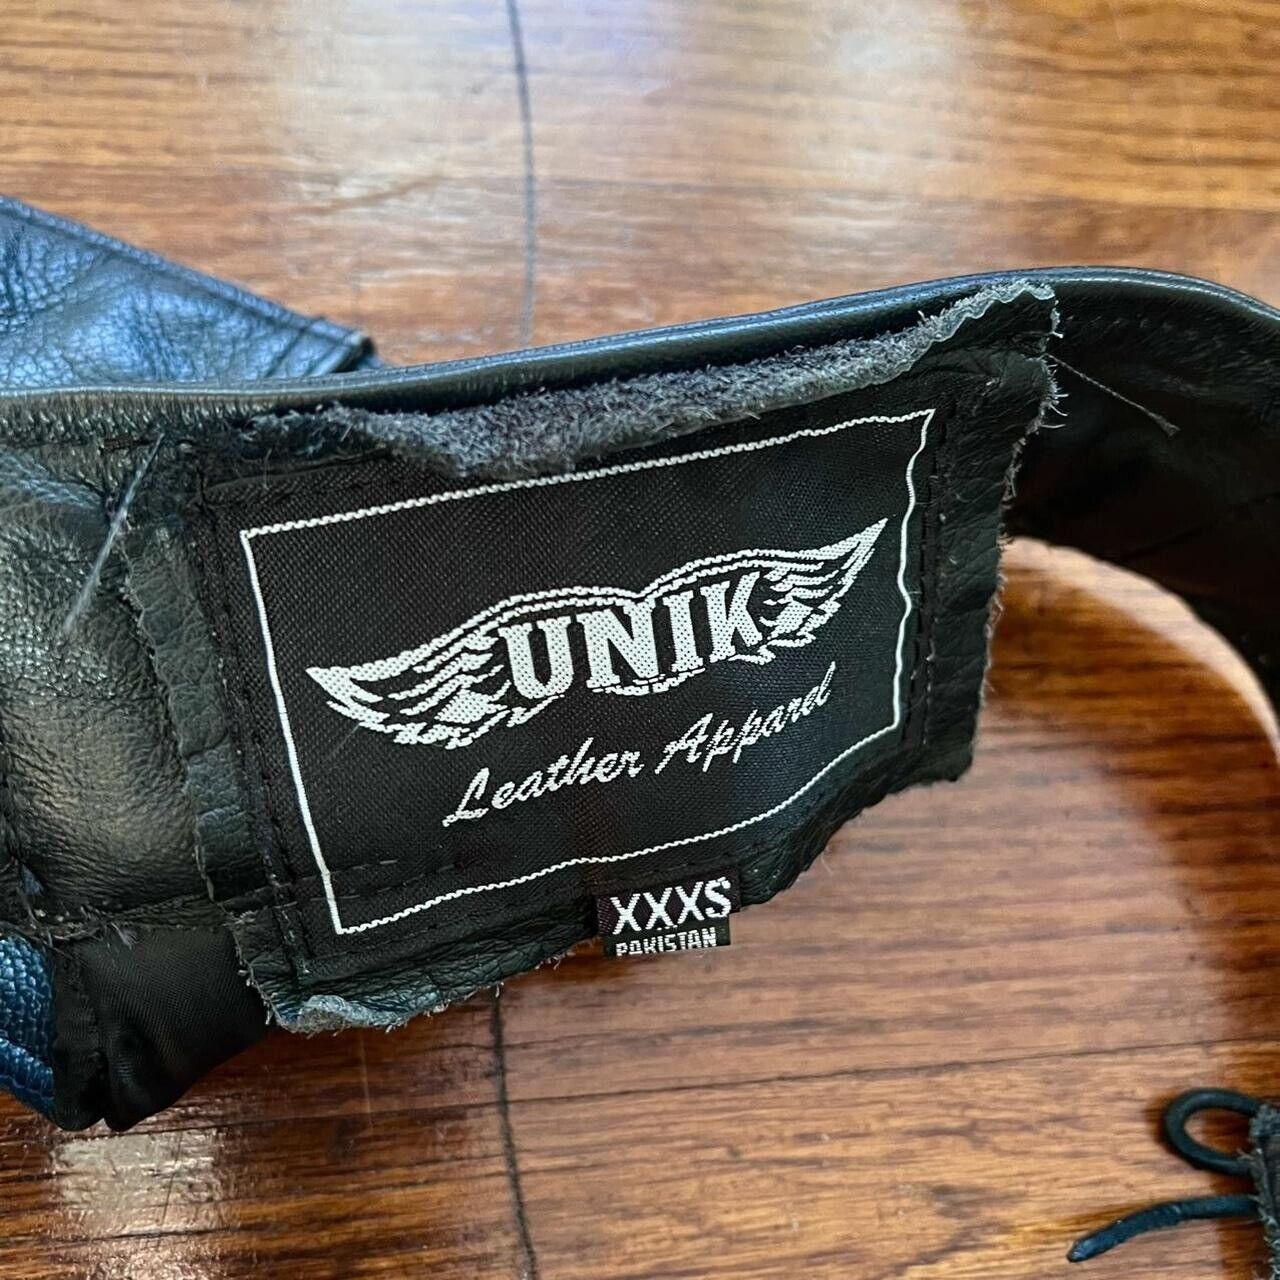 Unik Crotchless Leather Chaps | eBay